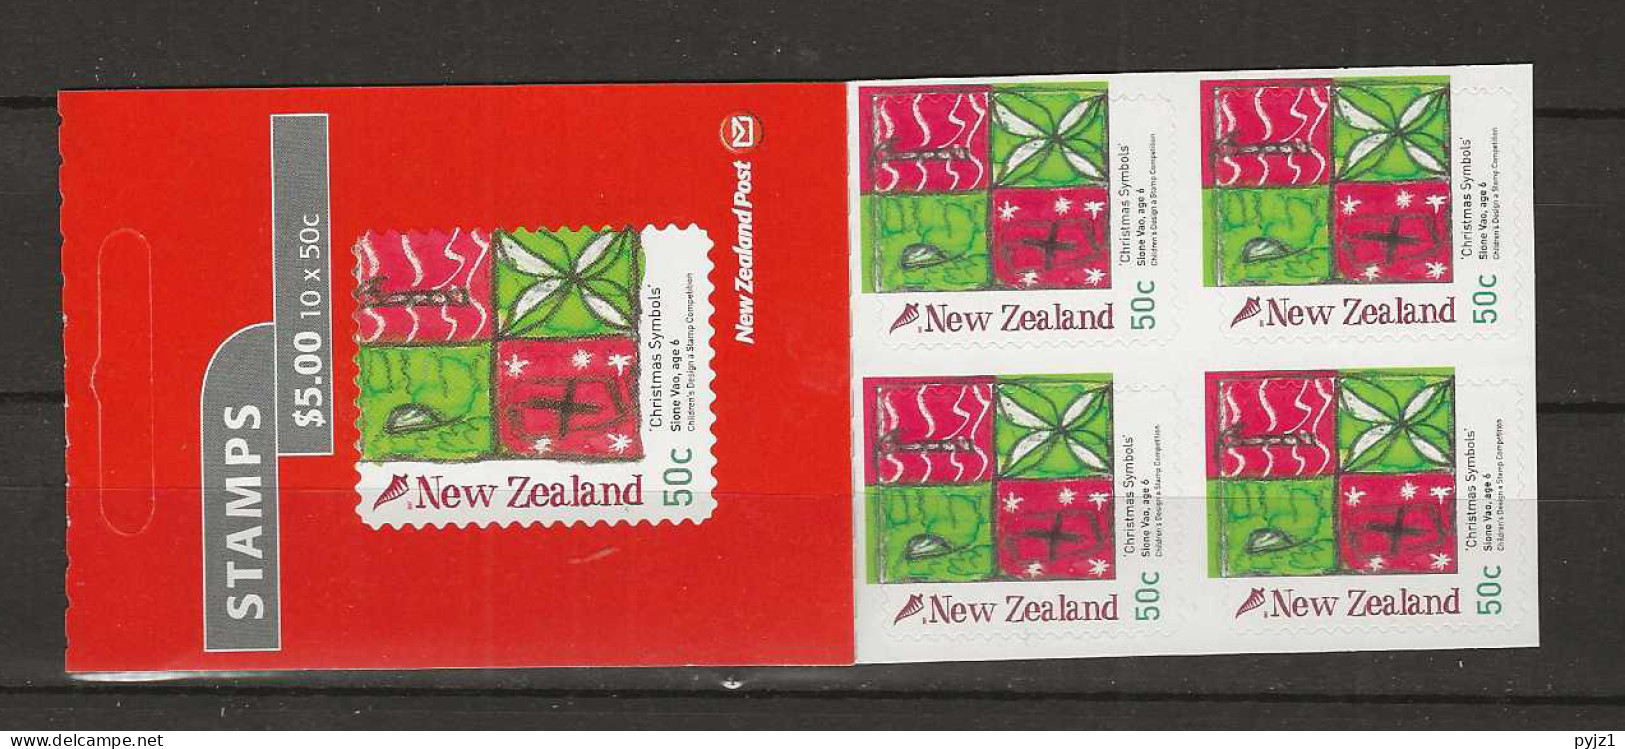 2007 MNH New Zealand Booklet Mi 2462 Postfris** - Carnets